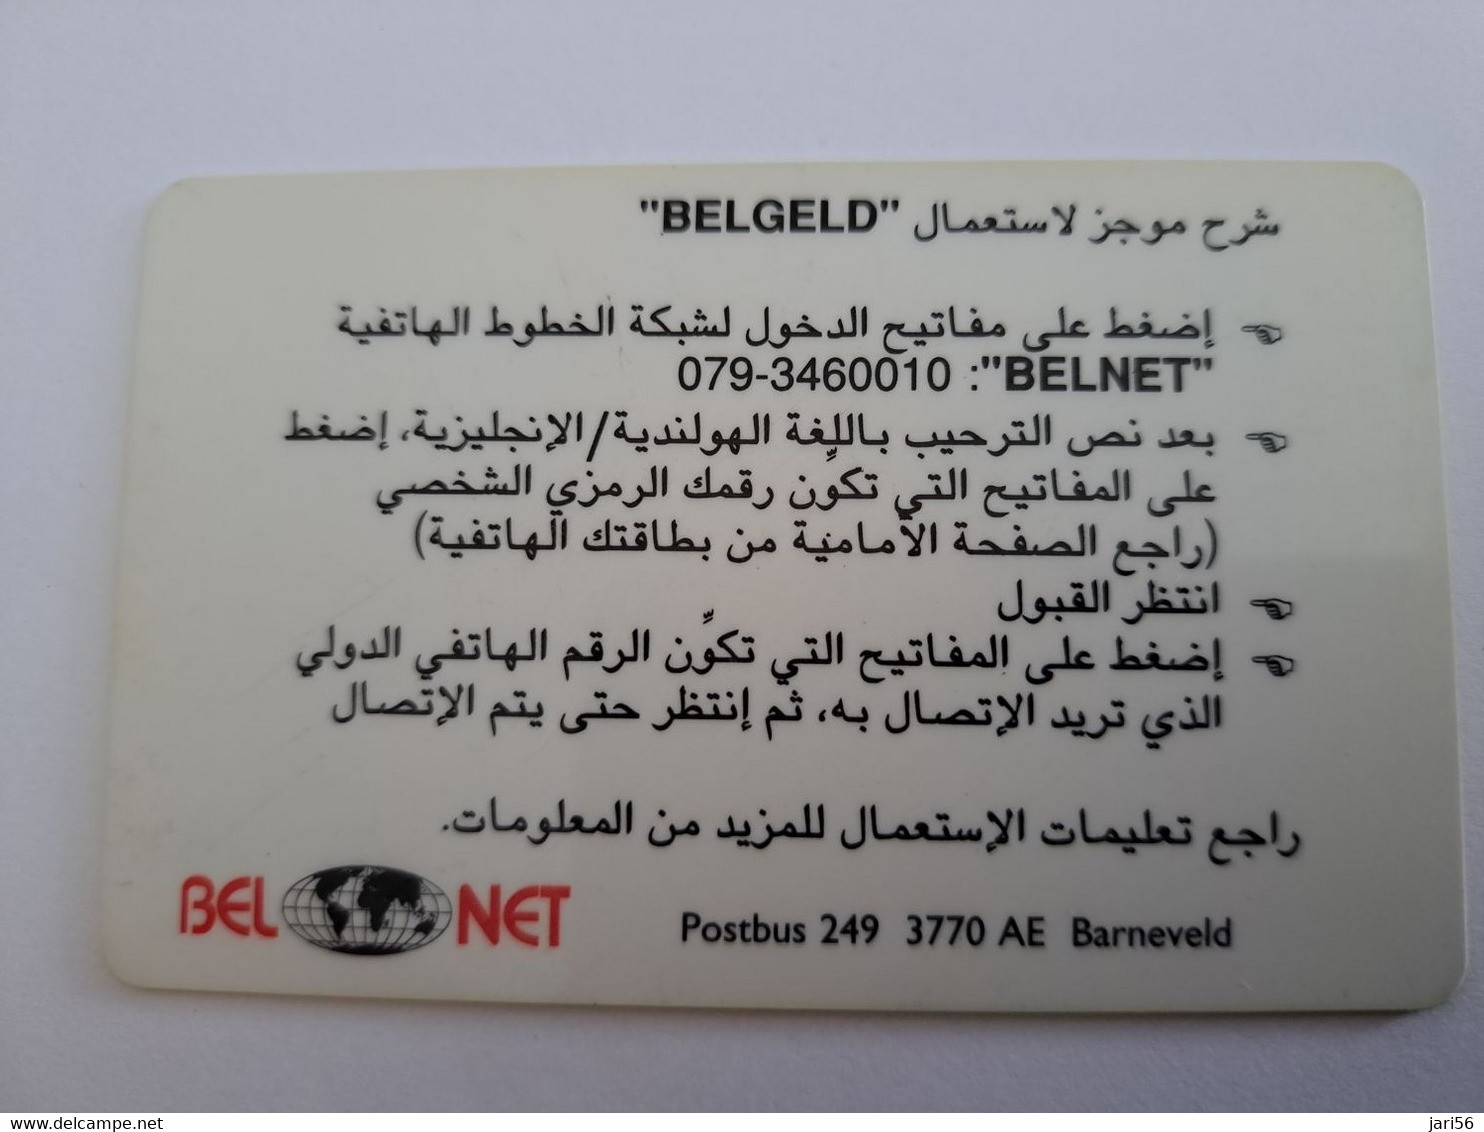 NETHERLANDS   FL 25,- COUNTRY  ARABIAN  /BEL NET  / THICK CARD  / OLDER CARD    PREPAID  Nice Used  ** 11170** - Cartes GSM, Prépayées Et Recharges